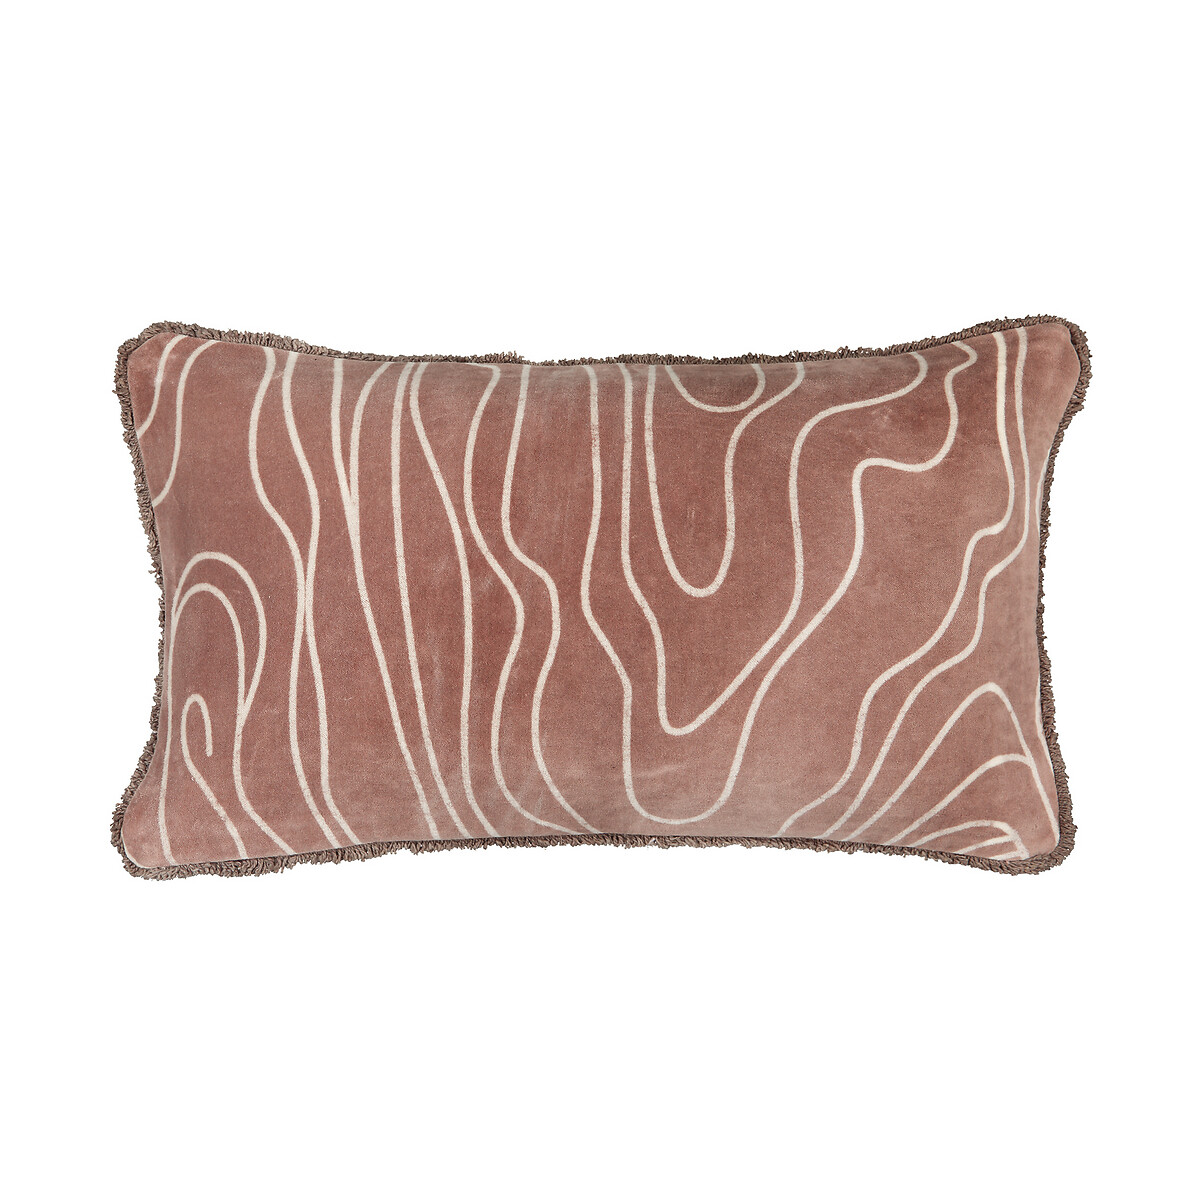 Чехол На подушку из велюра Pongou 50 x 30 см розовый